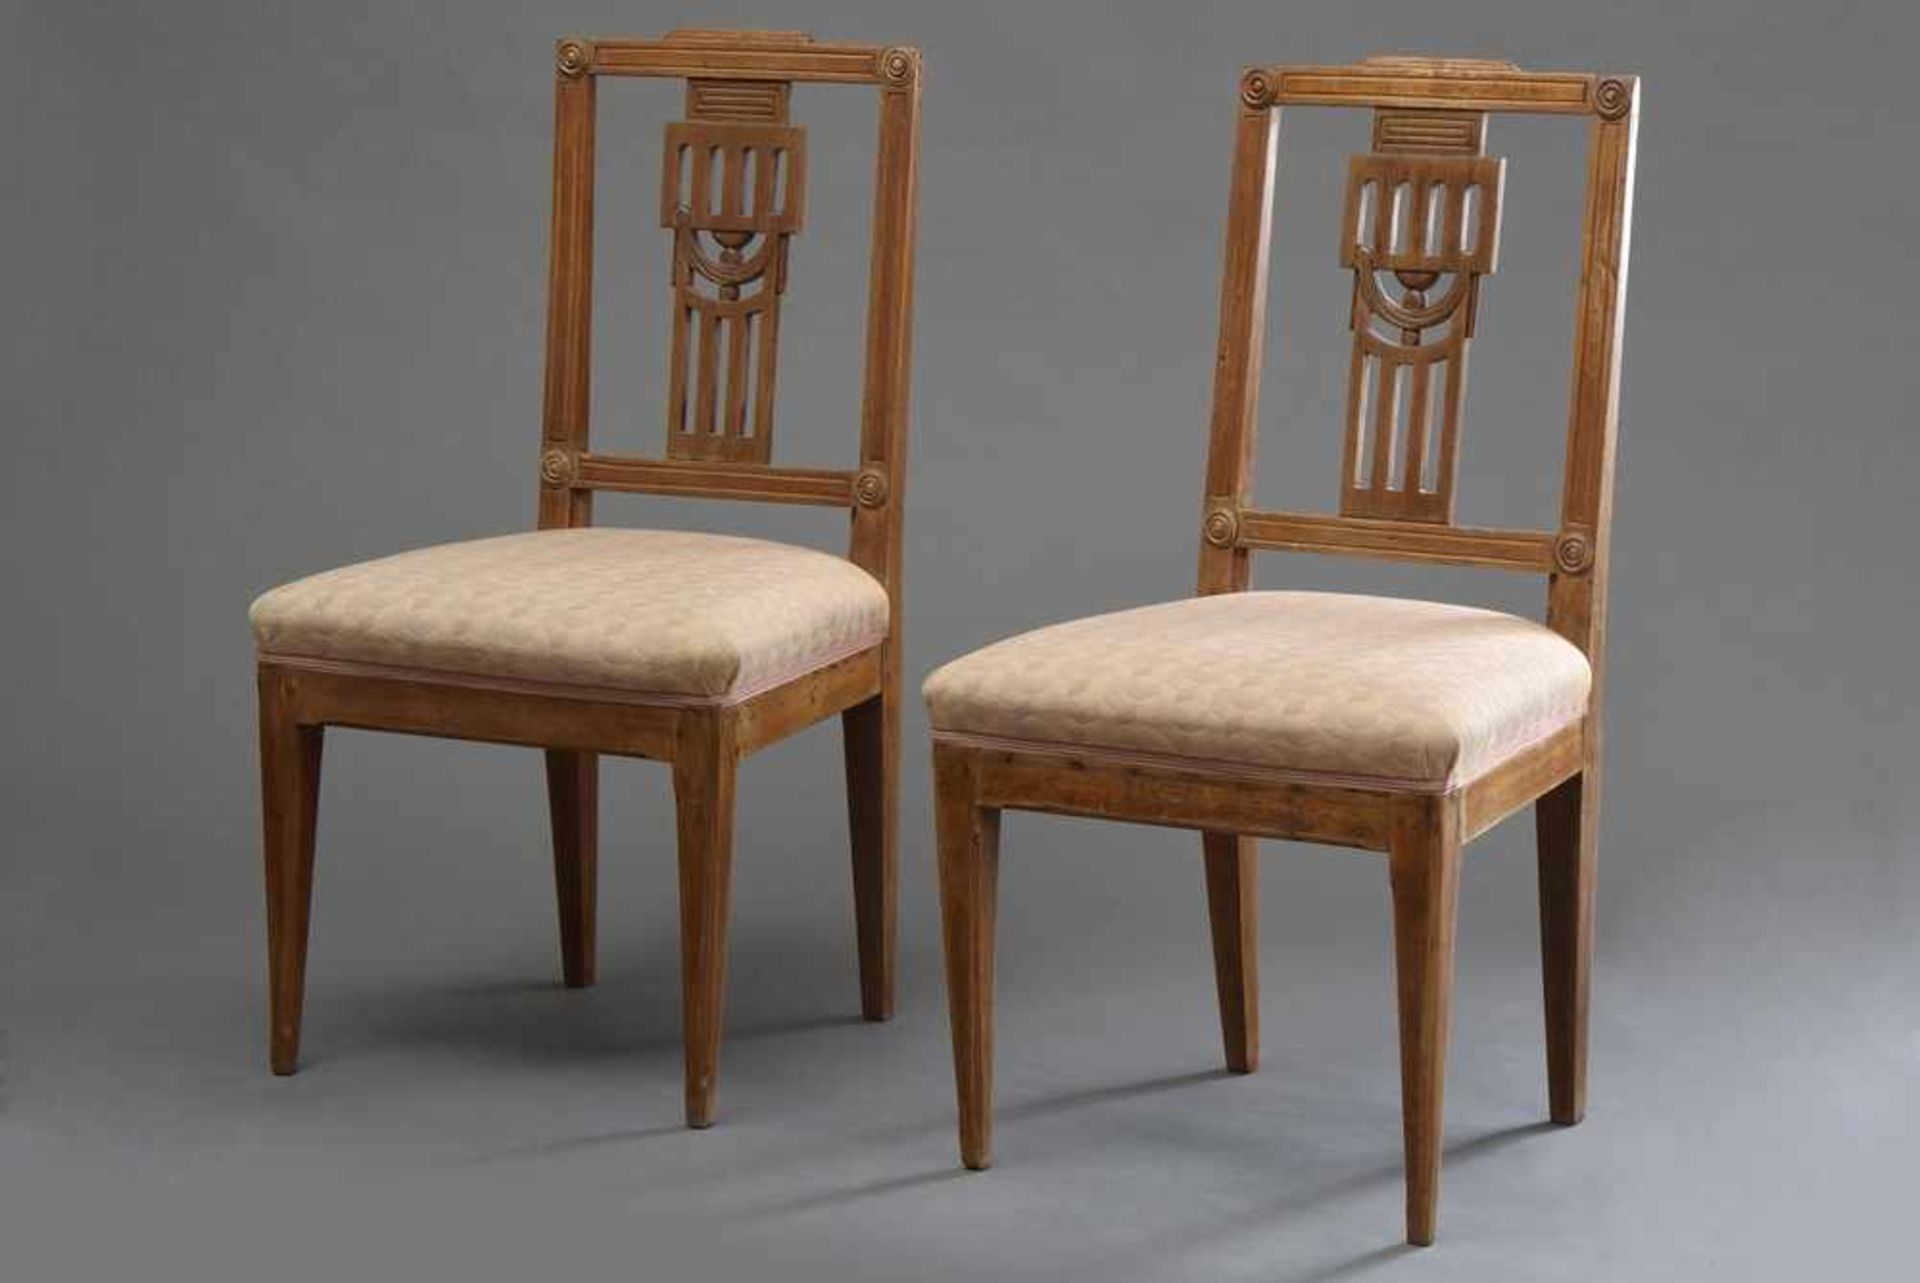 2 Klassizistische Stühle mit streng durchbrochenem Rückenbrett in Louis XVI Façon, Obstholz, H. 45/